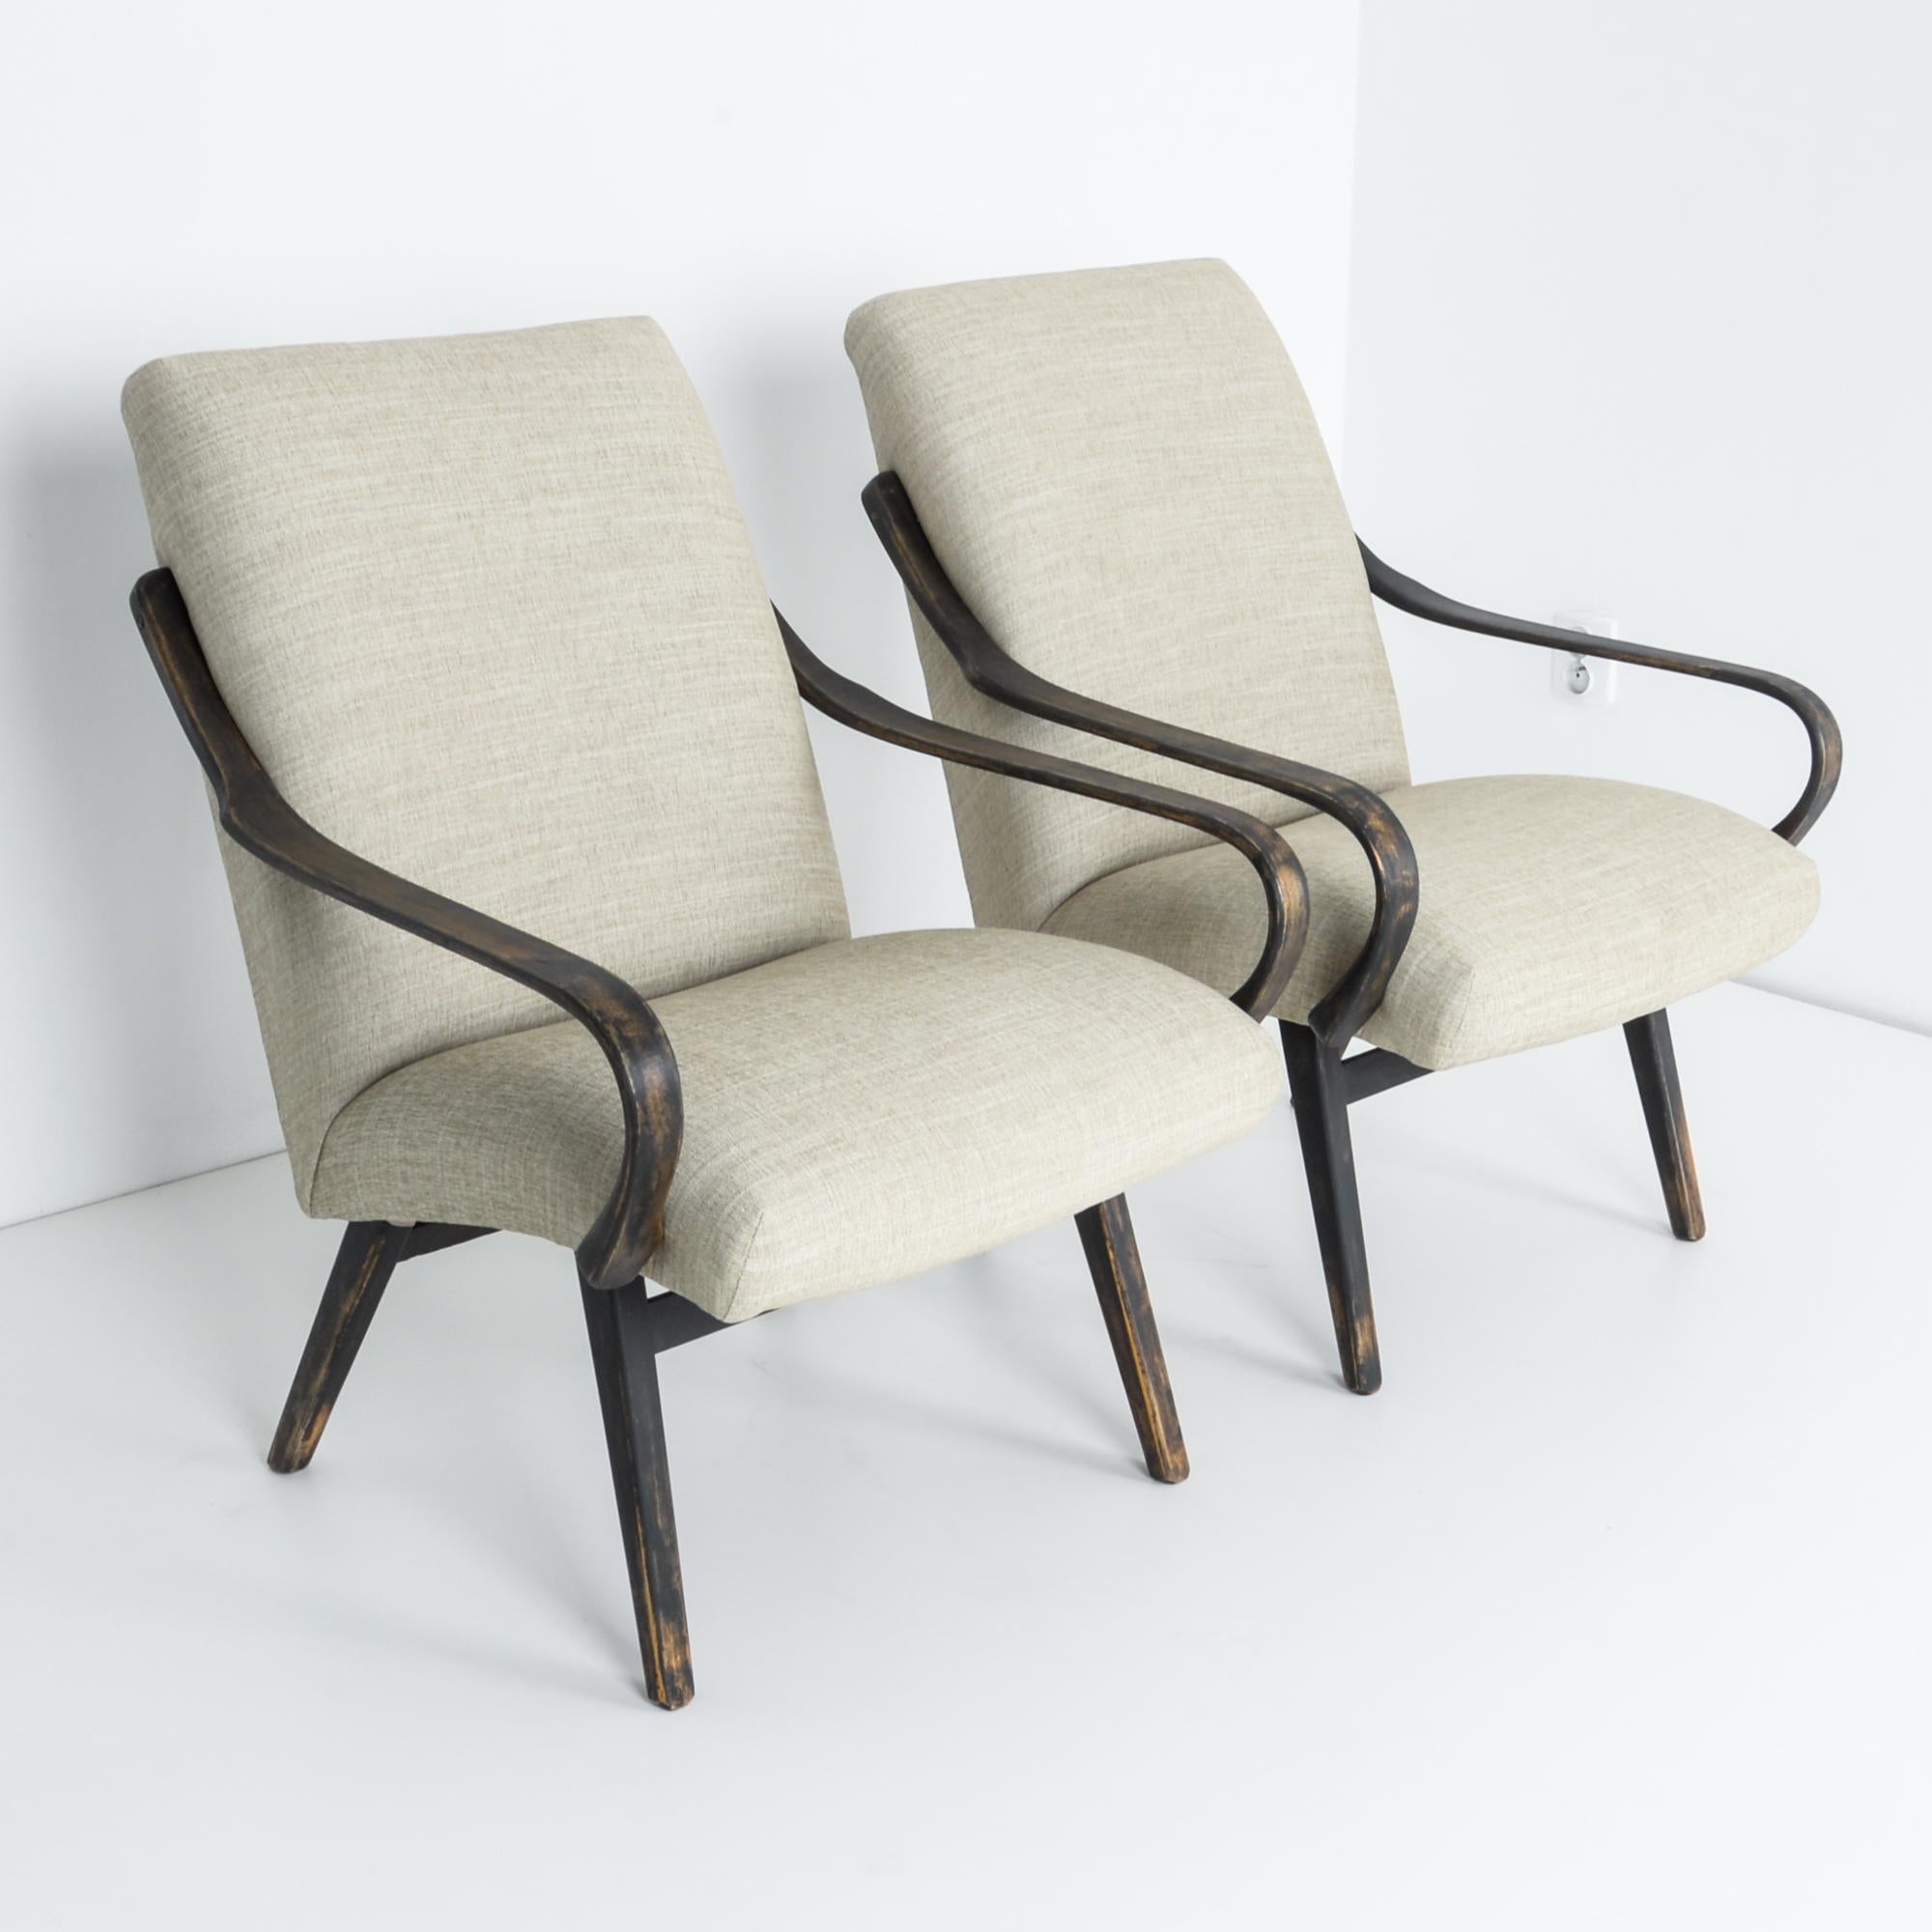 Hardwood 1960s Midcentury Czech Lounge Chairs, a Pair